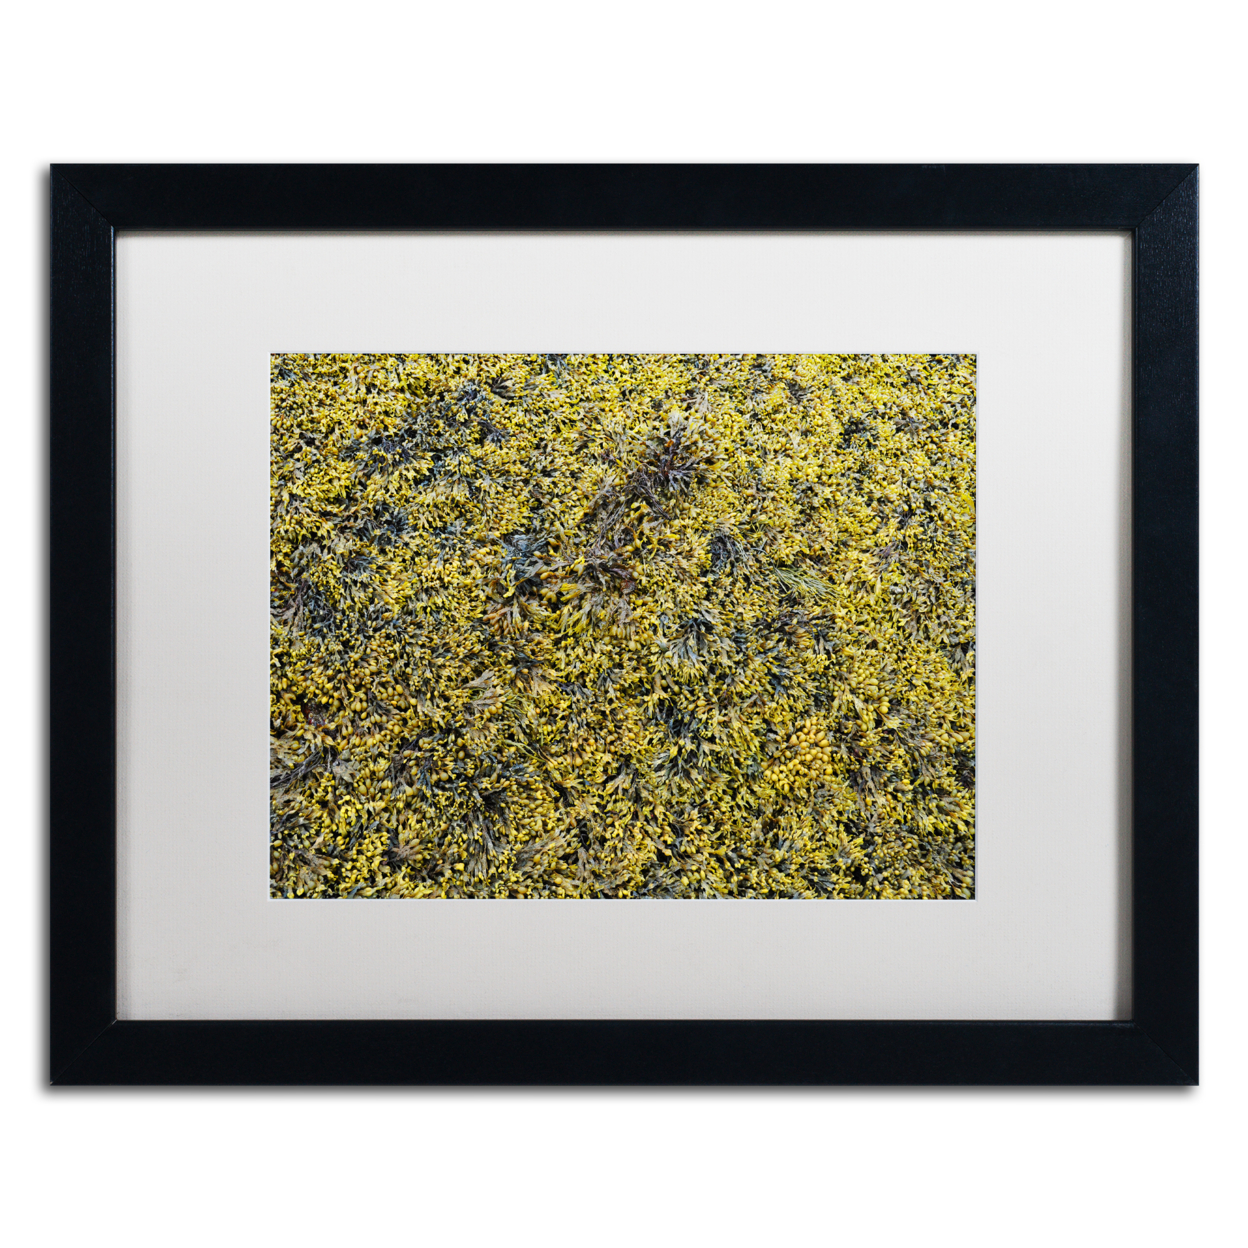 Nicole Dietz 'Seaweed' Black Wooden Framed Art 18 X 22 Inches